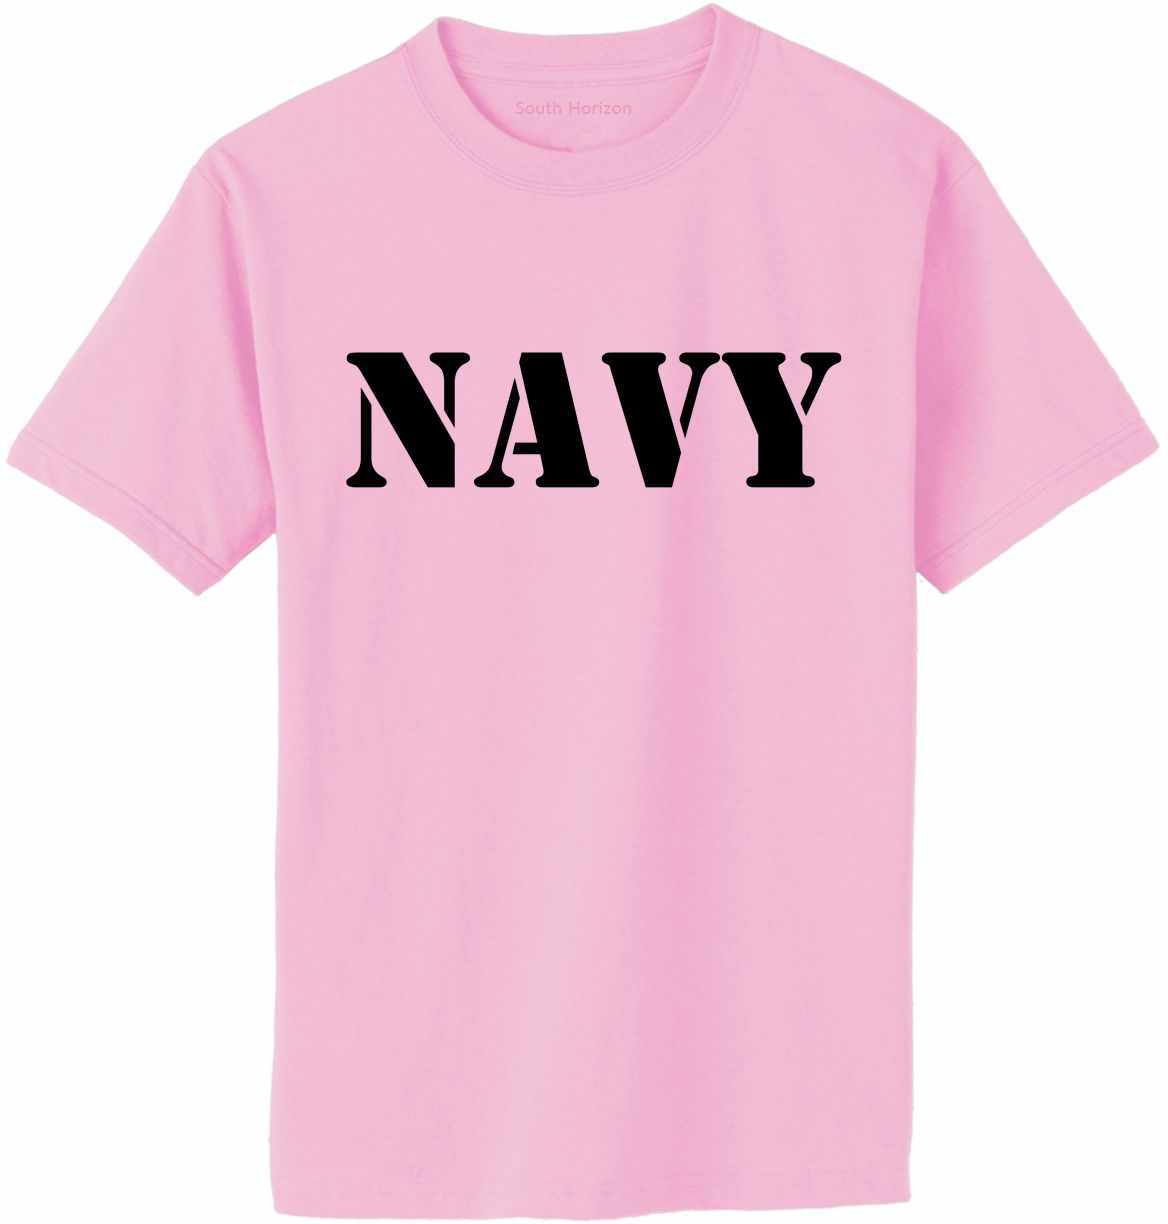 NAVY Adult T-Shirt (#346-1)